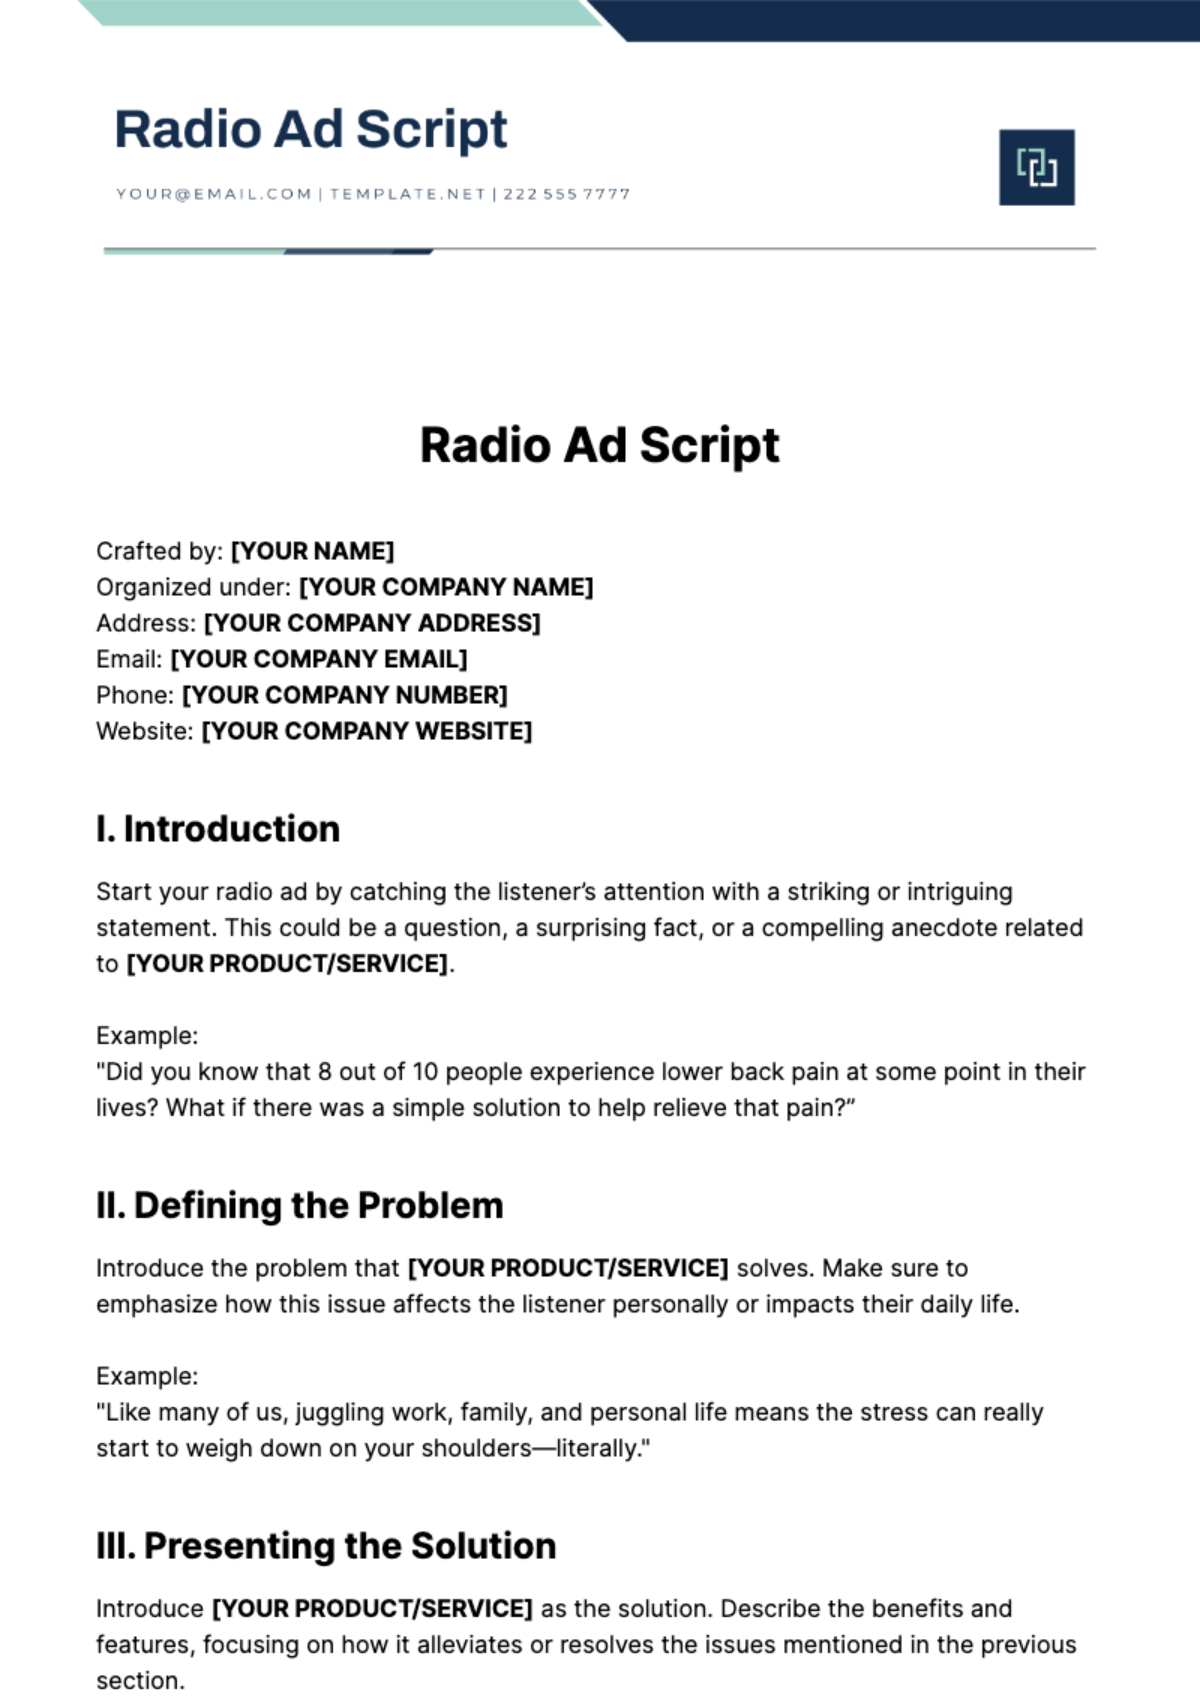 Free Radio Ad Script Template